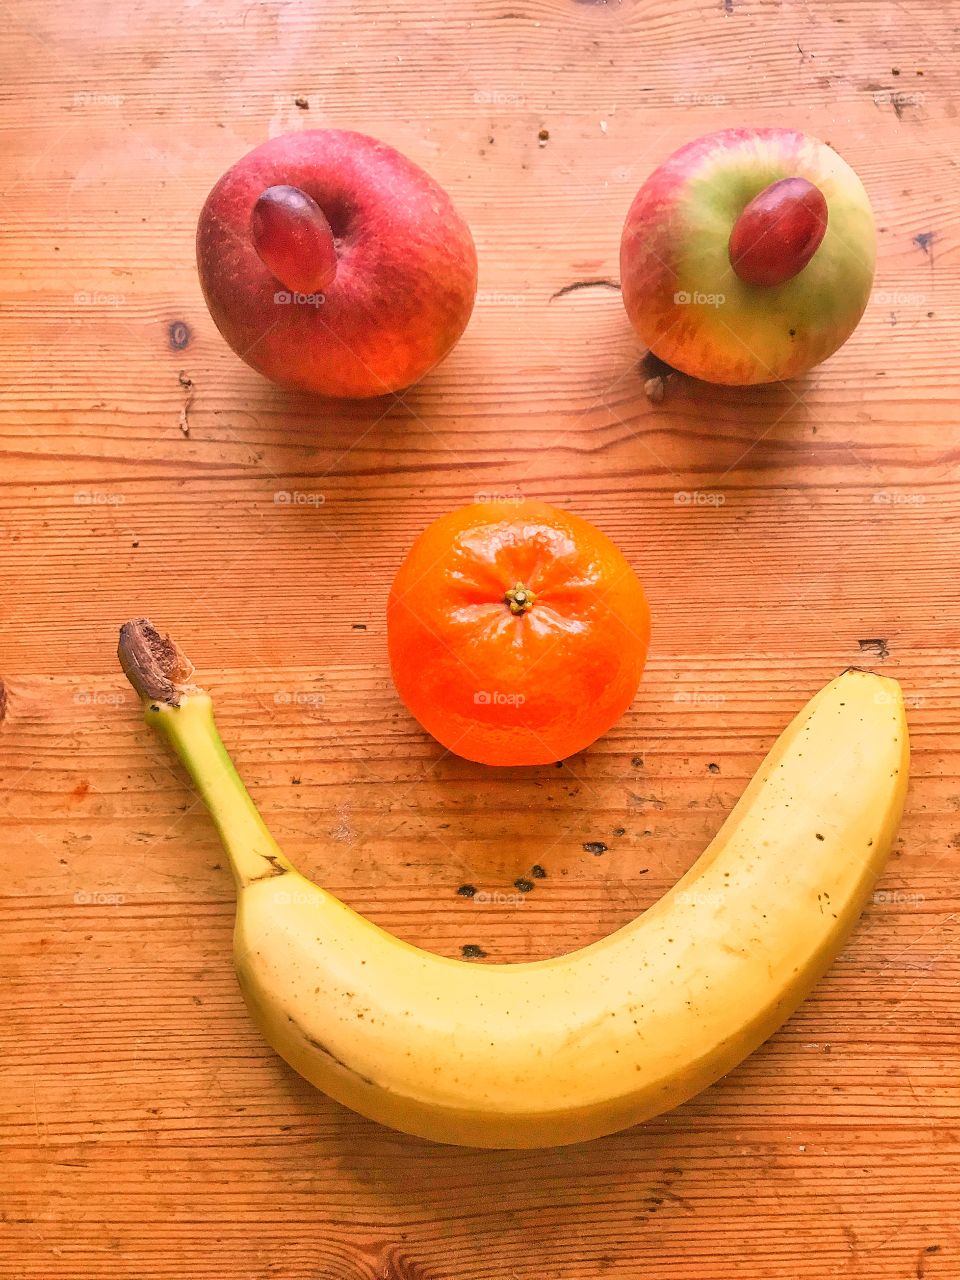 Fruit face 😂